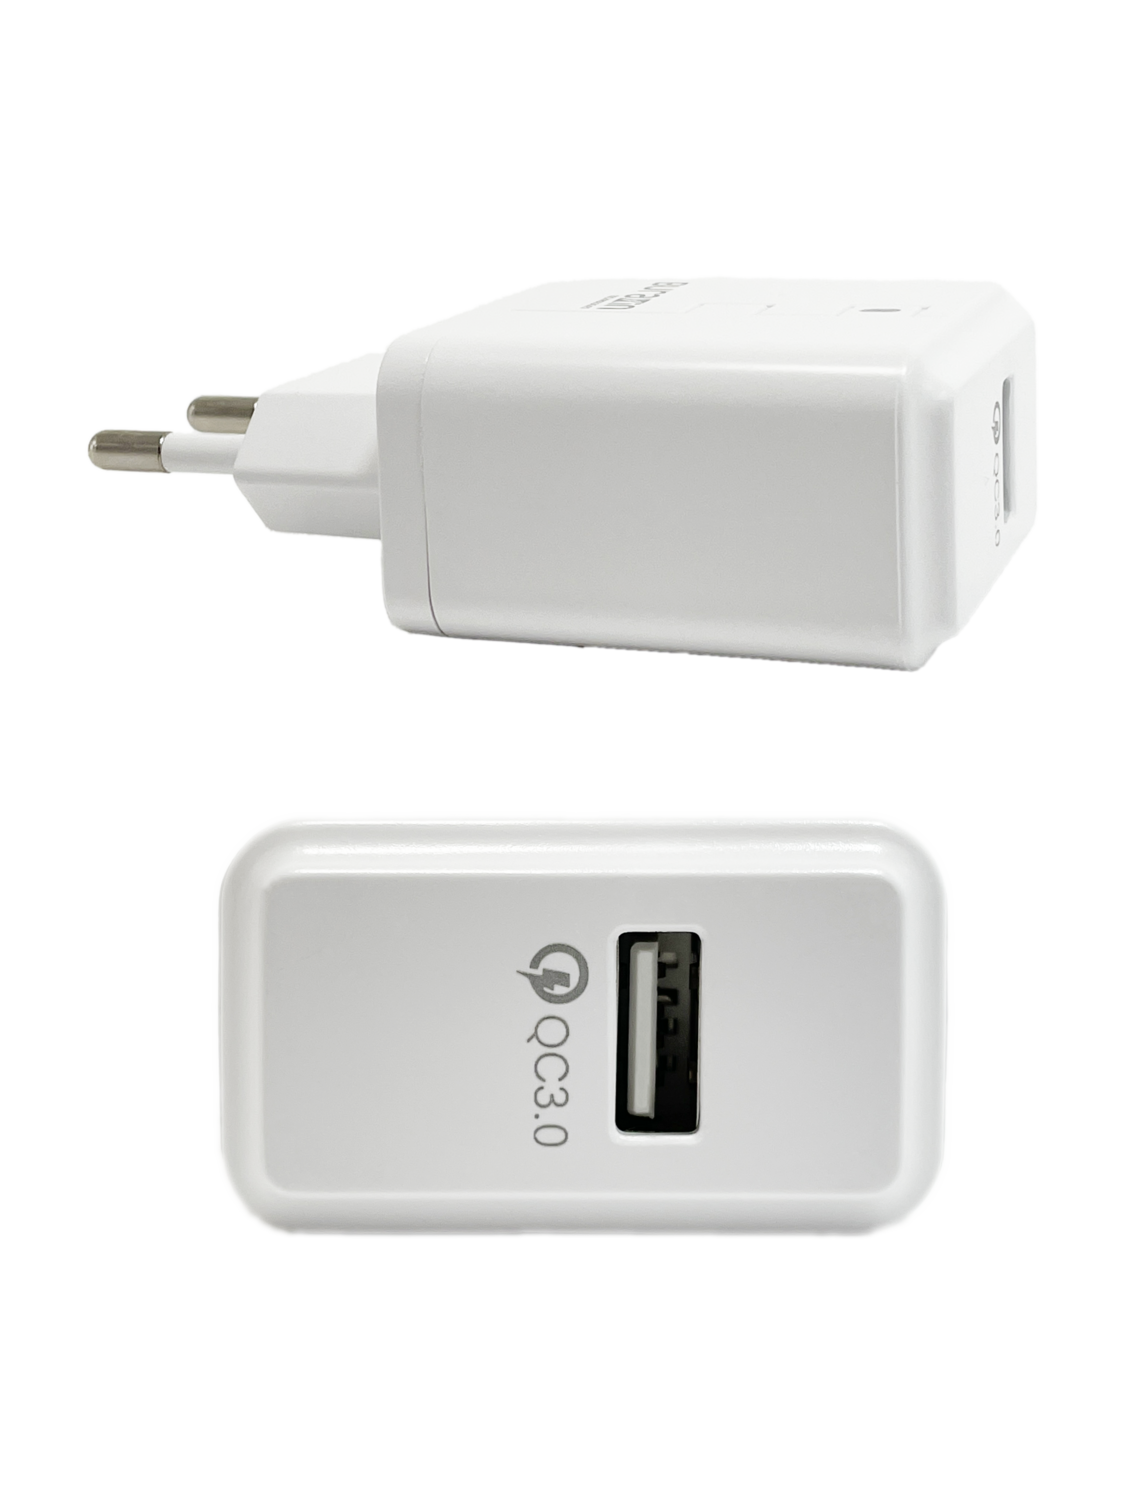 Зарядное устройство Buraxin W020 Qualcomm. Quich Charge 3.0 micro-USB